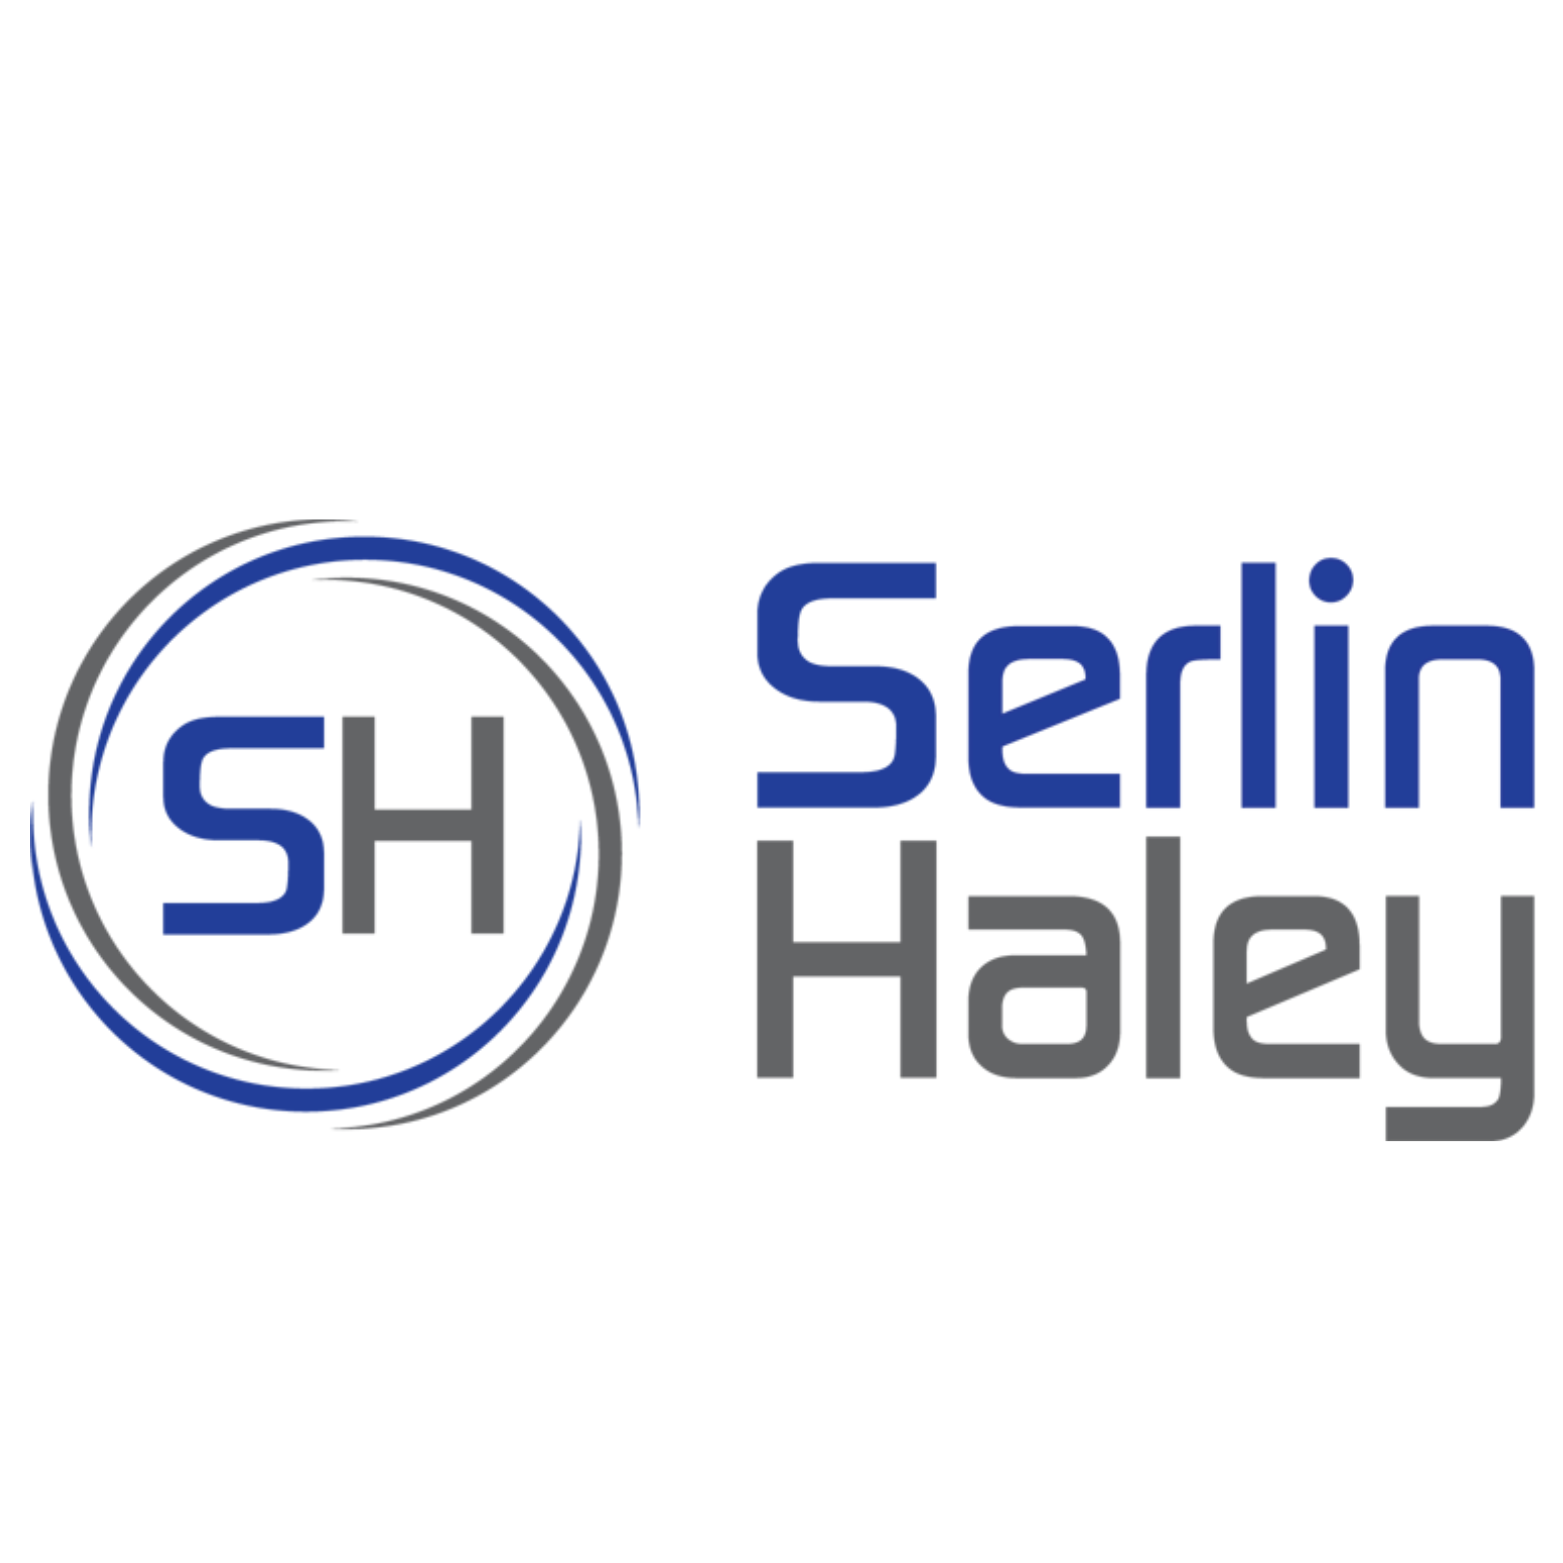 Serlin Haley